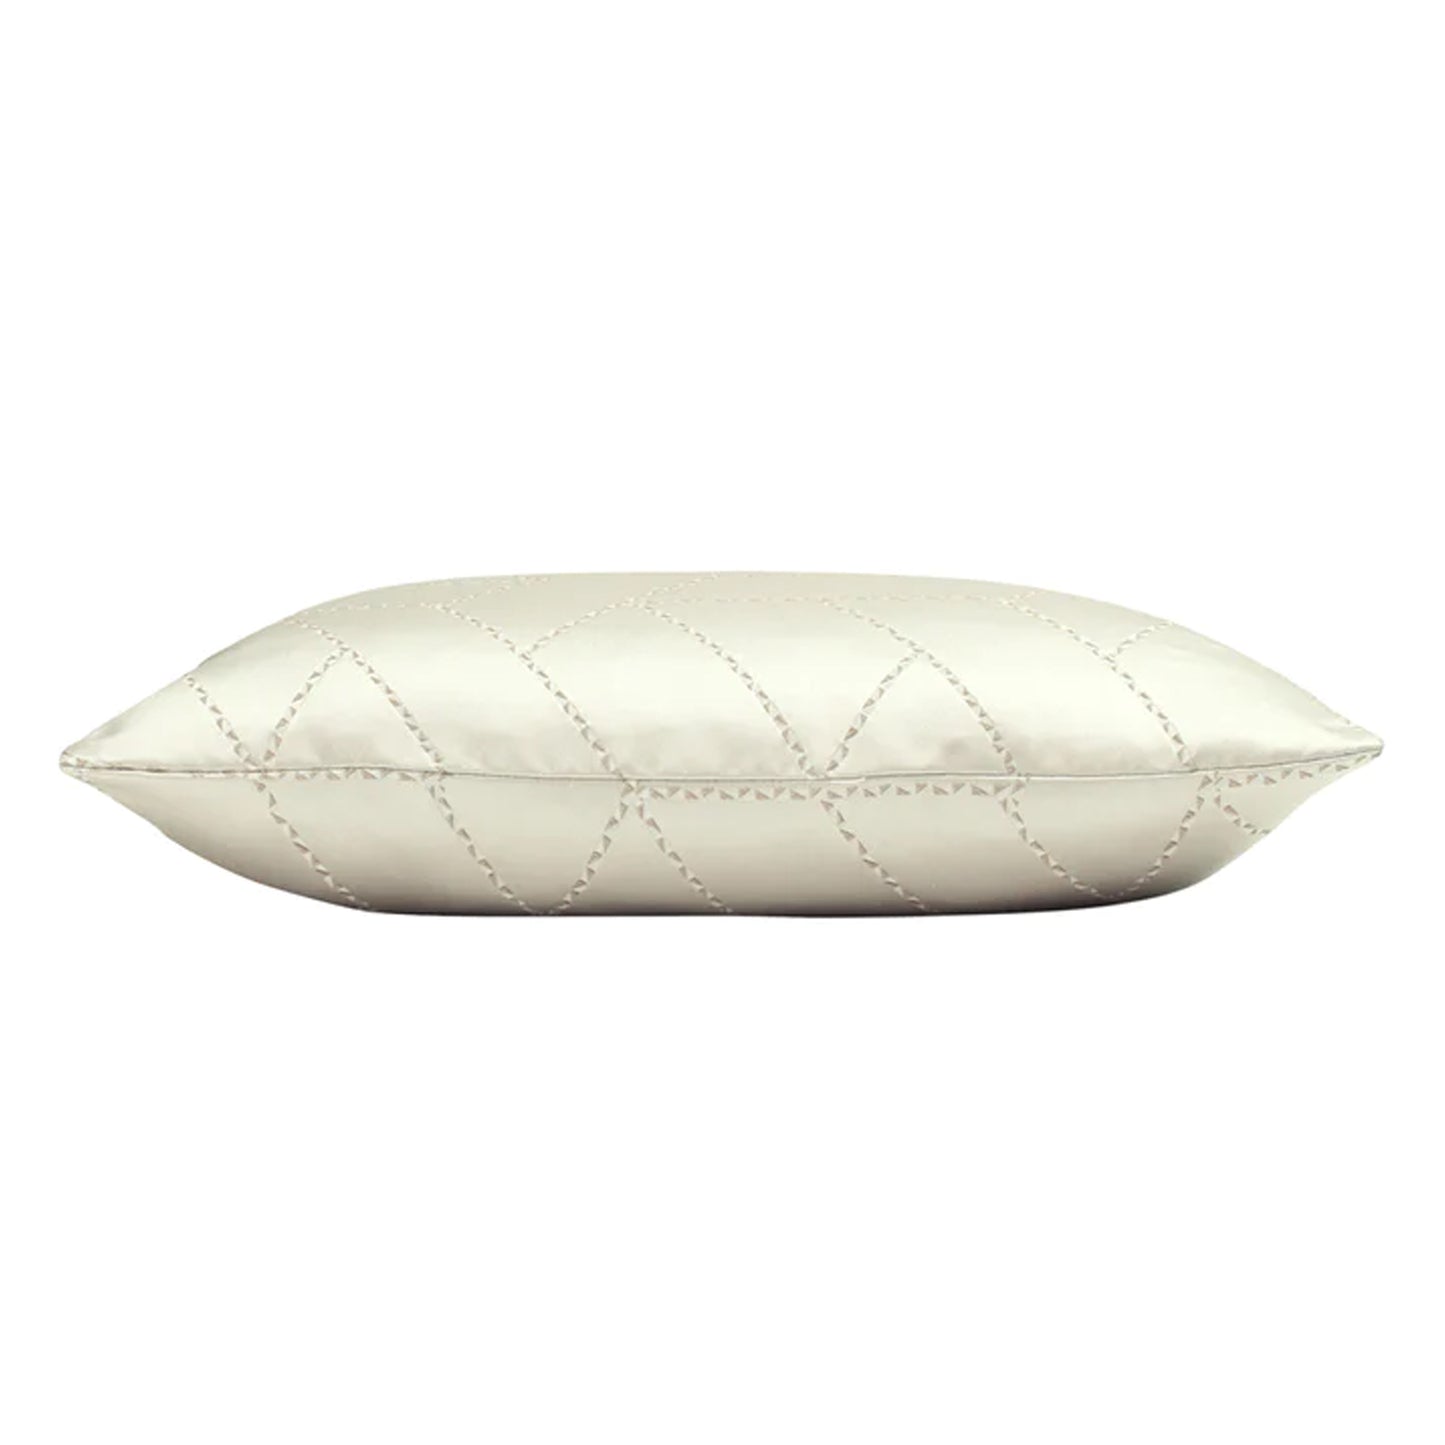 Pearl Geometric Cushion